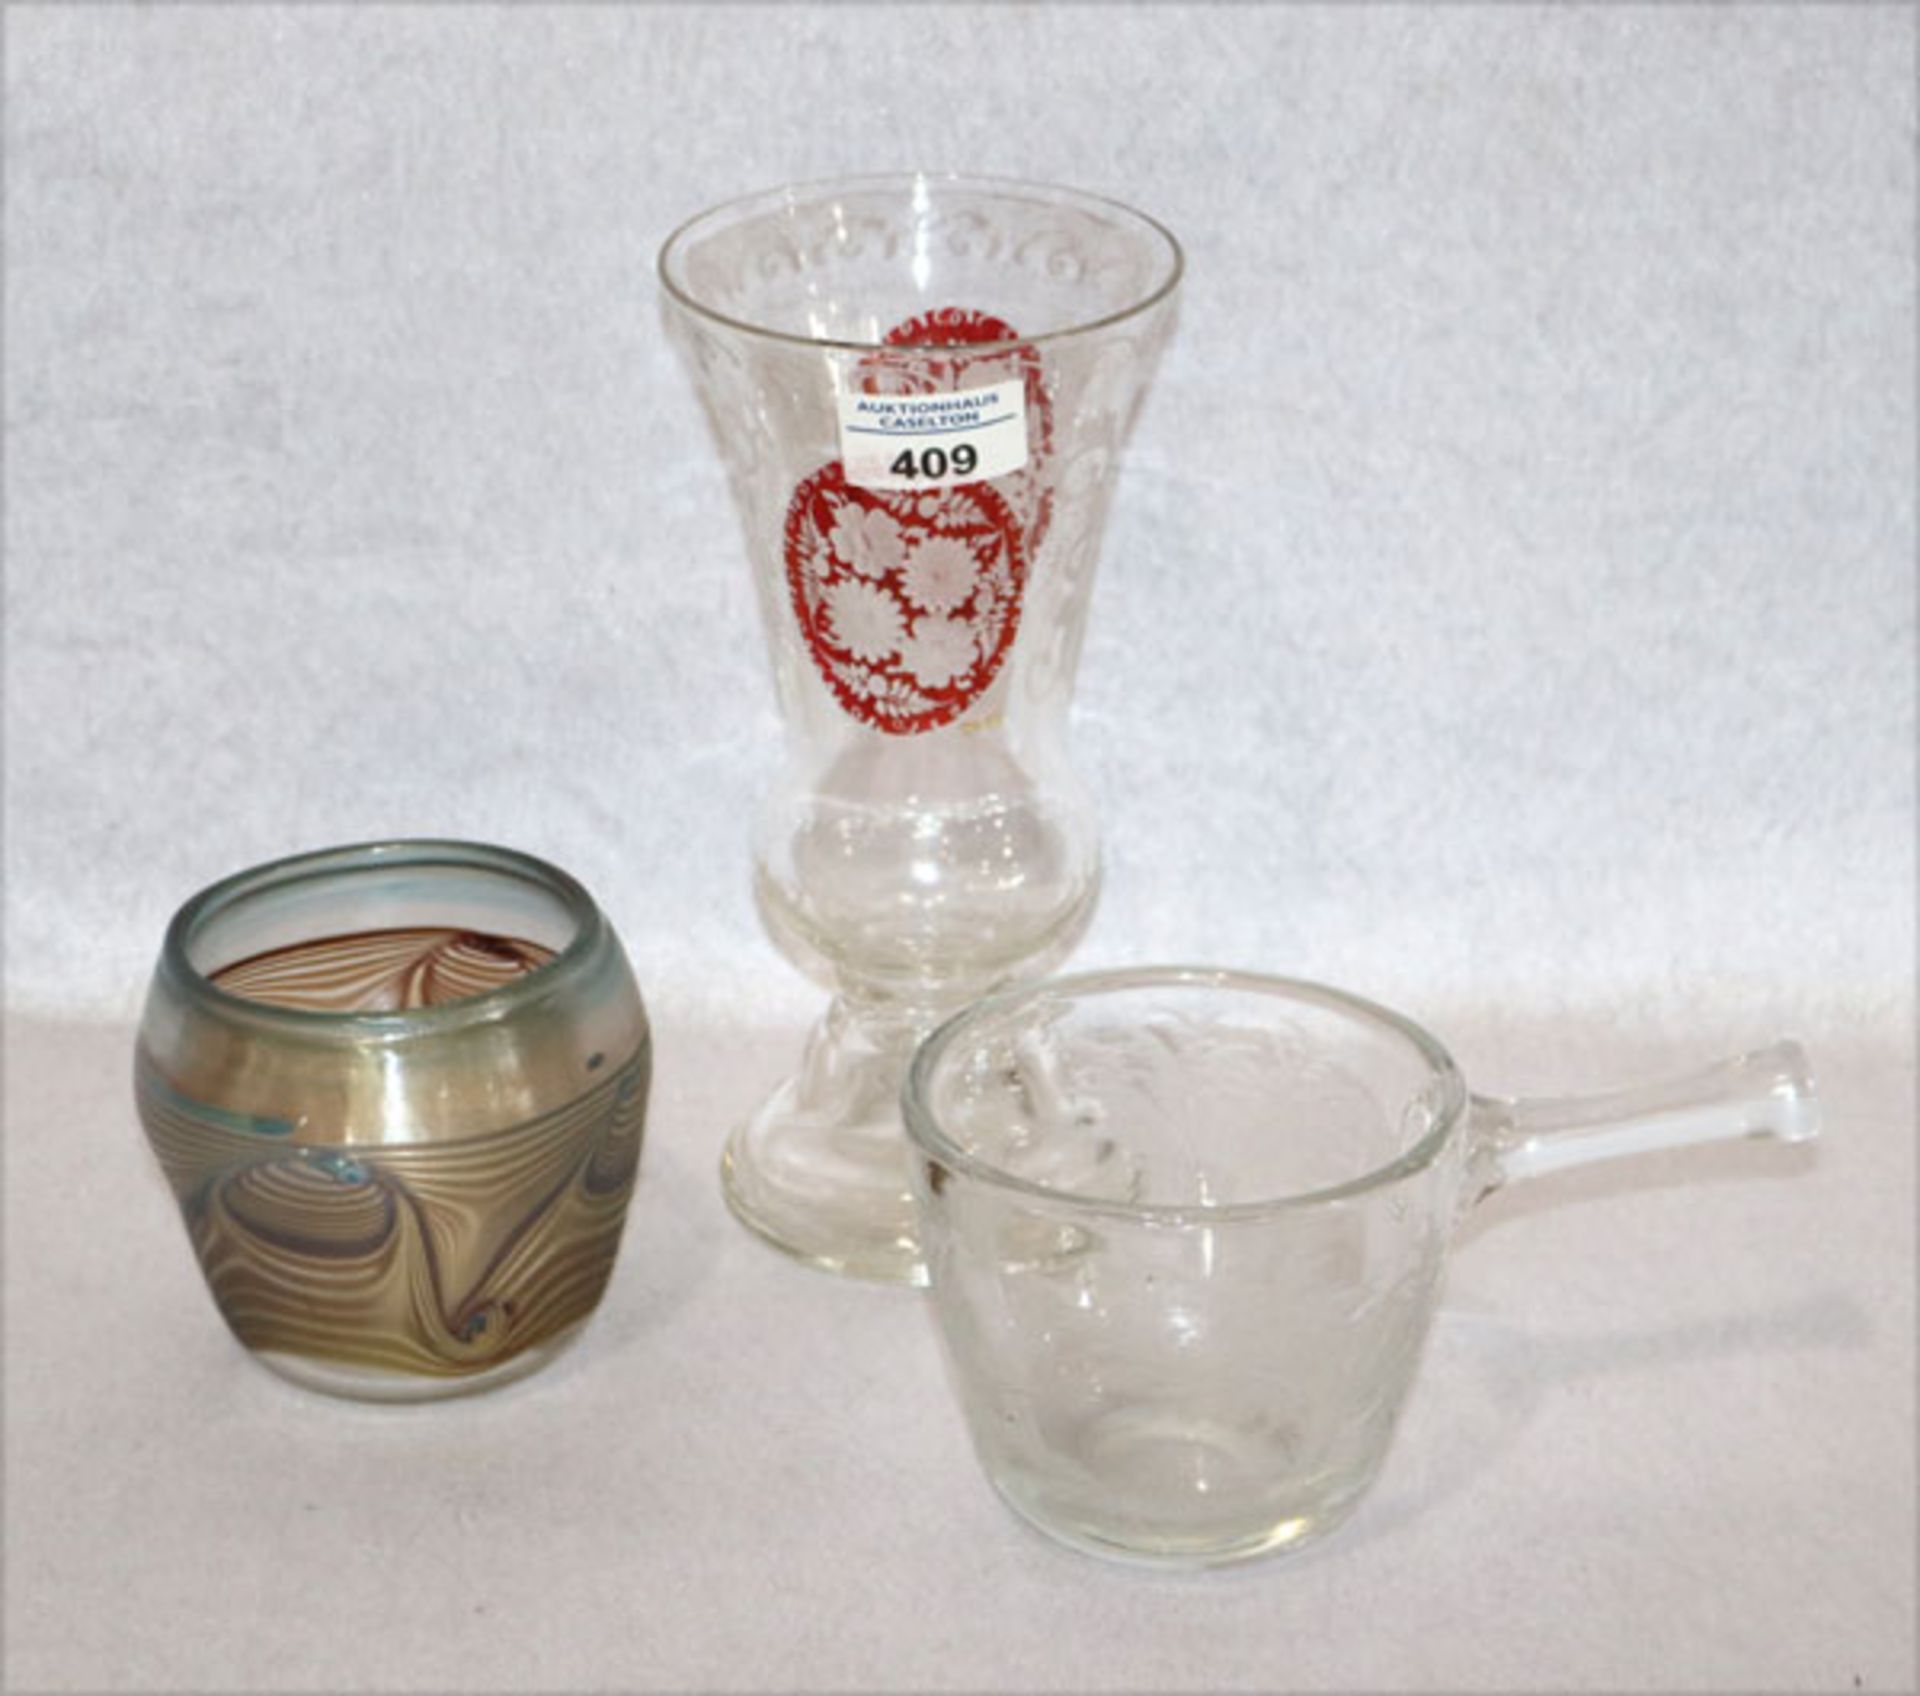 Glas-Konvolut: Pokalglas mit floraler Gravur, H 22 cm, D 10,5 cm, Stielgefäß mit Jagdgravur, H 10 cm